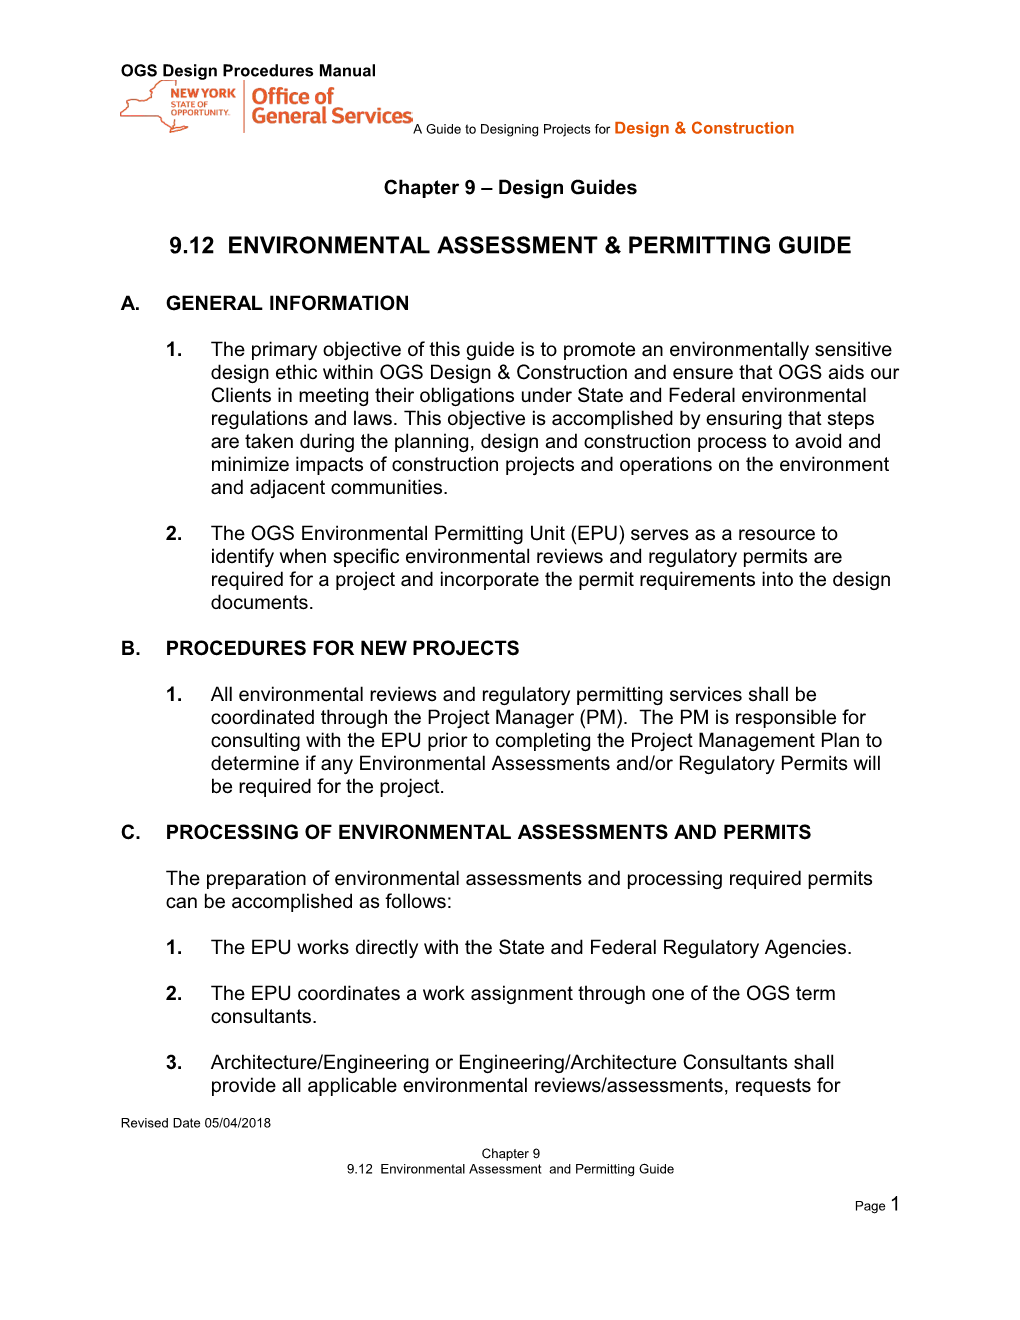 9.12 Environmental Assessment & Permitting Guide